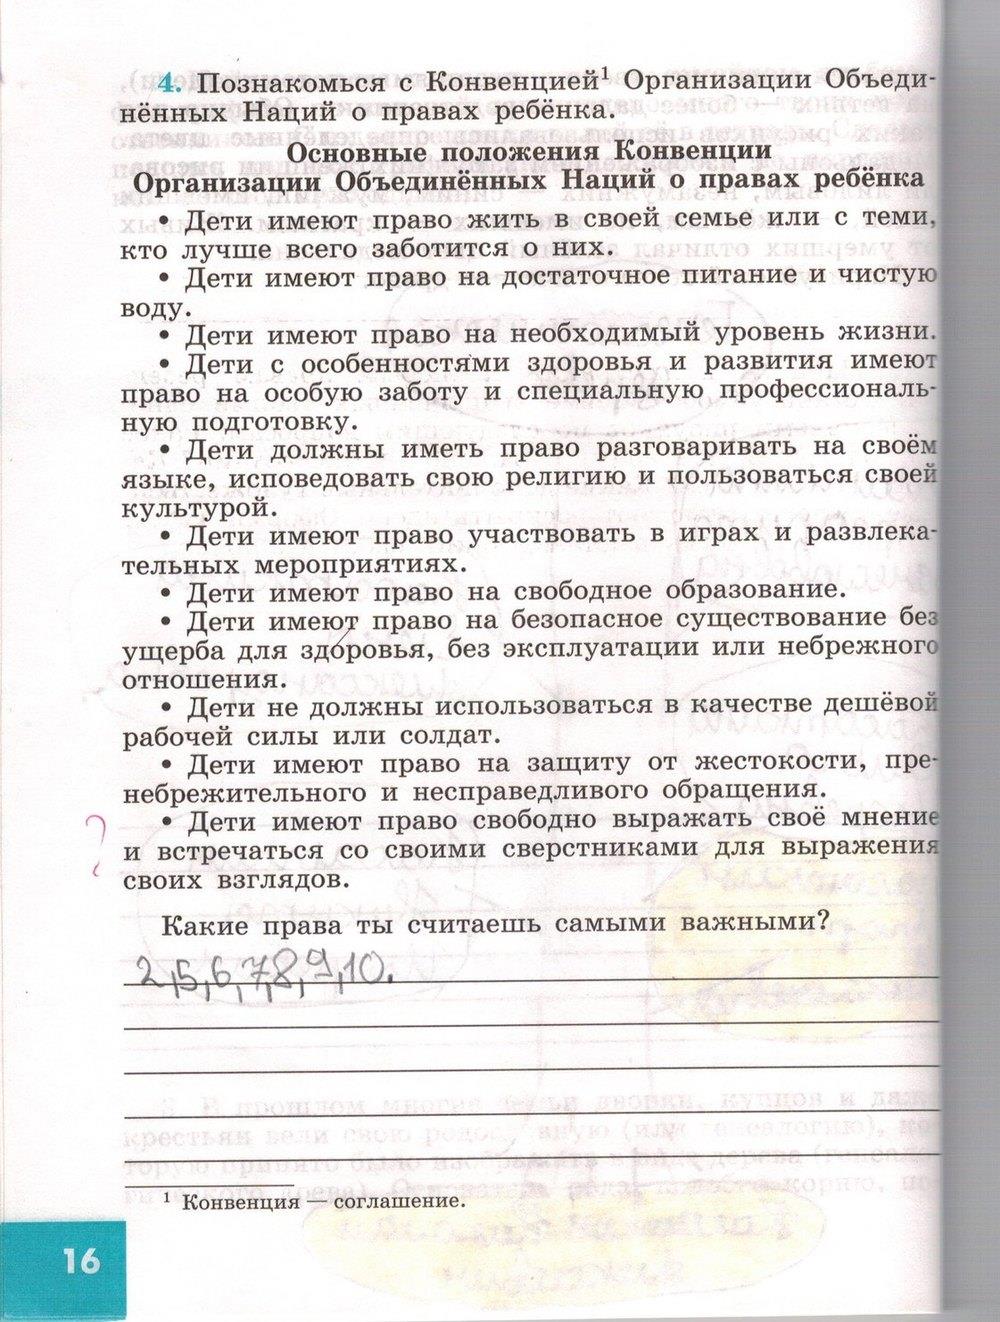 гдз 5 класс рабочая тетрадь страница 16 обществознание Иванова, Хотеенкова